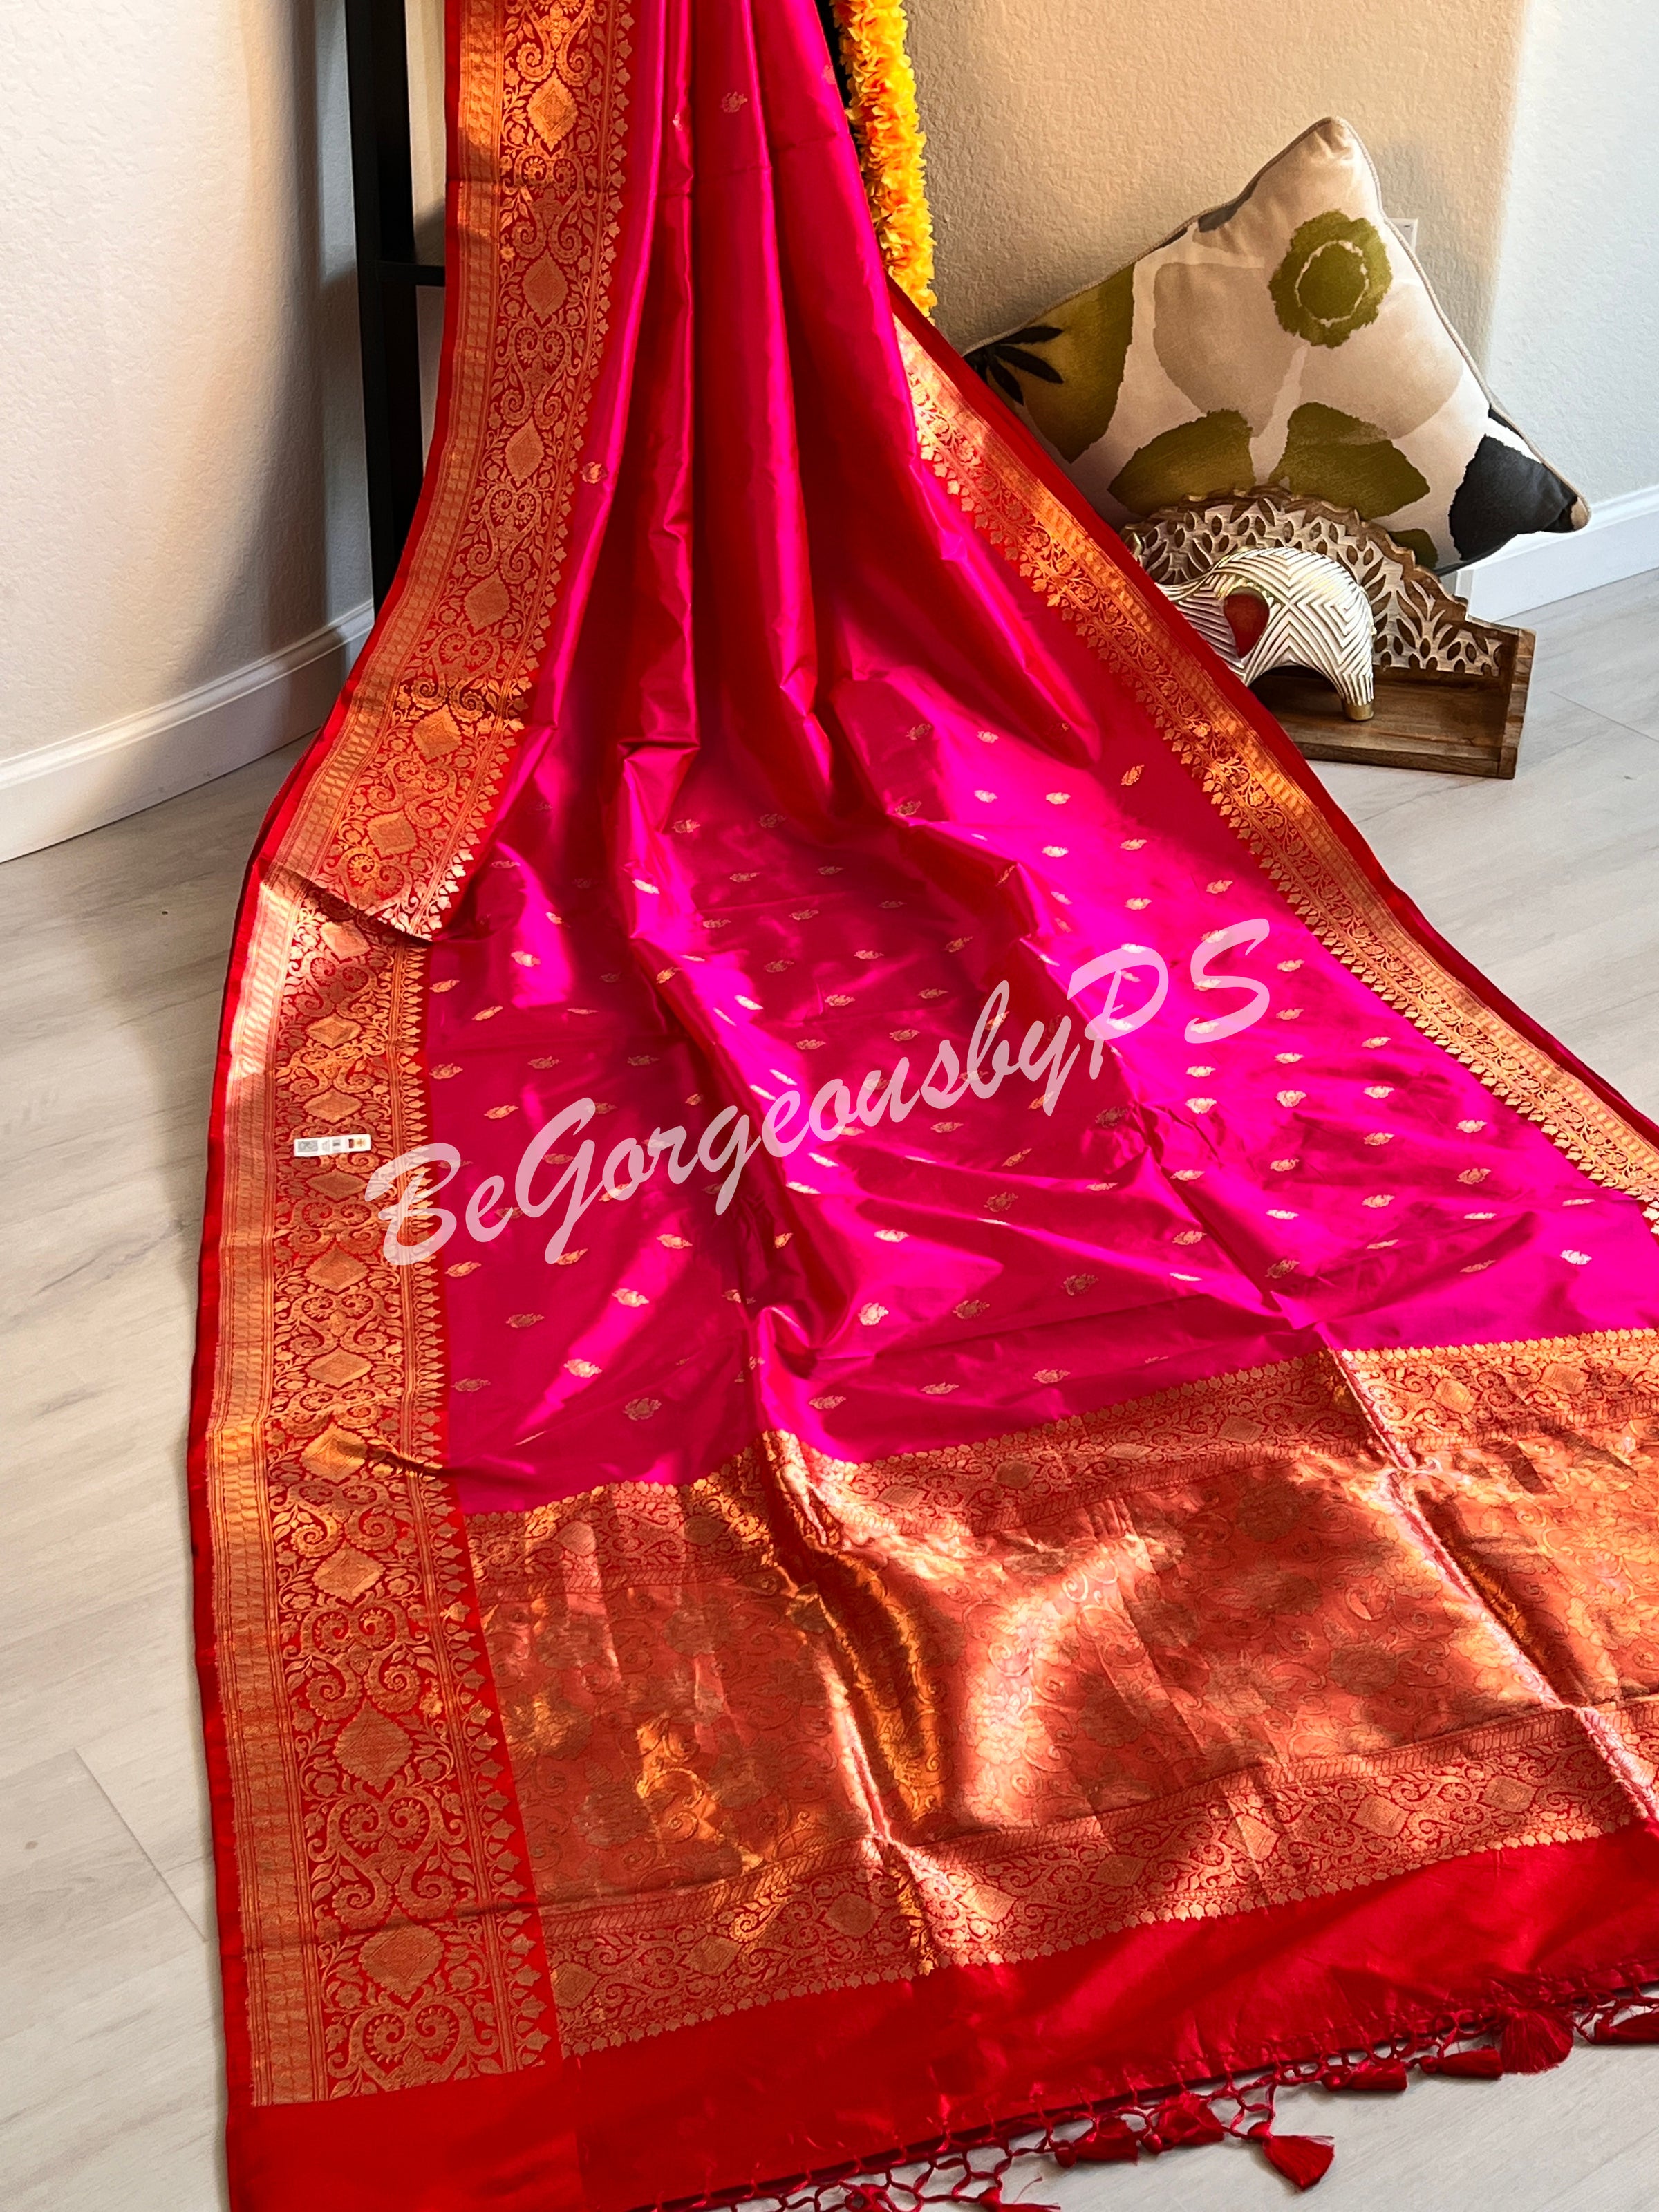 Buy Rameshwaram Fabrics Women's Banarasi Saree for Bride, Heavy Zari Work, Bridal  Shalu,Weight : 1.Kg (Navey_Blue_Red) at Amazon.in